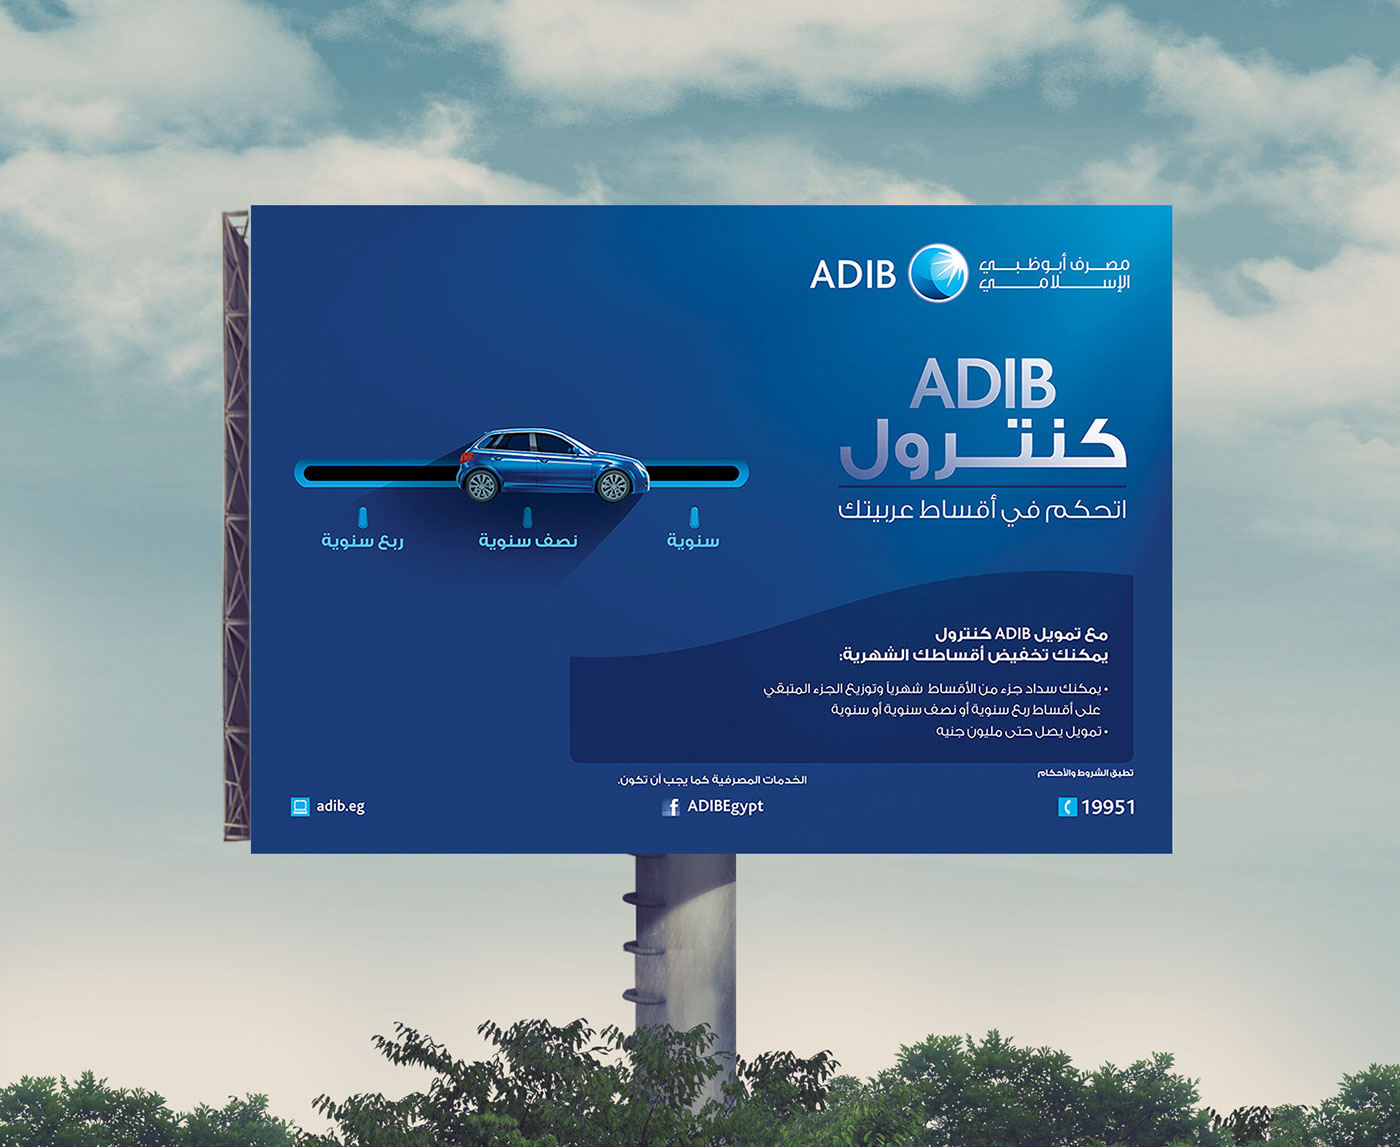 CAR LOAN adib ADIB Control car creative concept ad. ADV advertisment